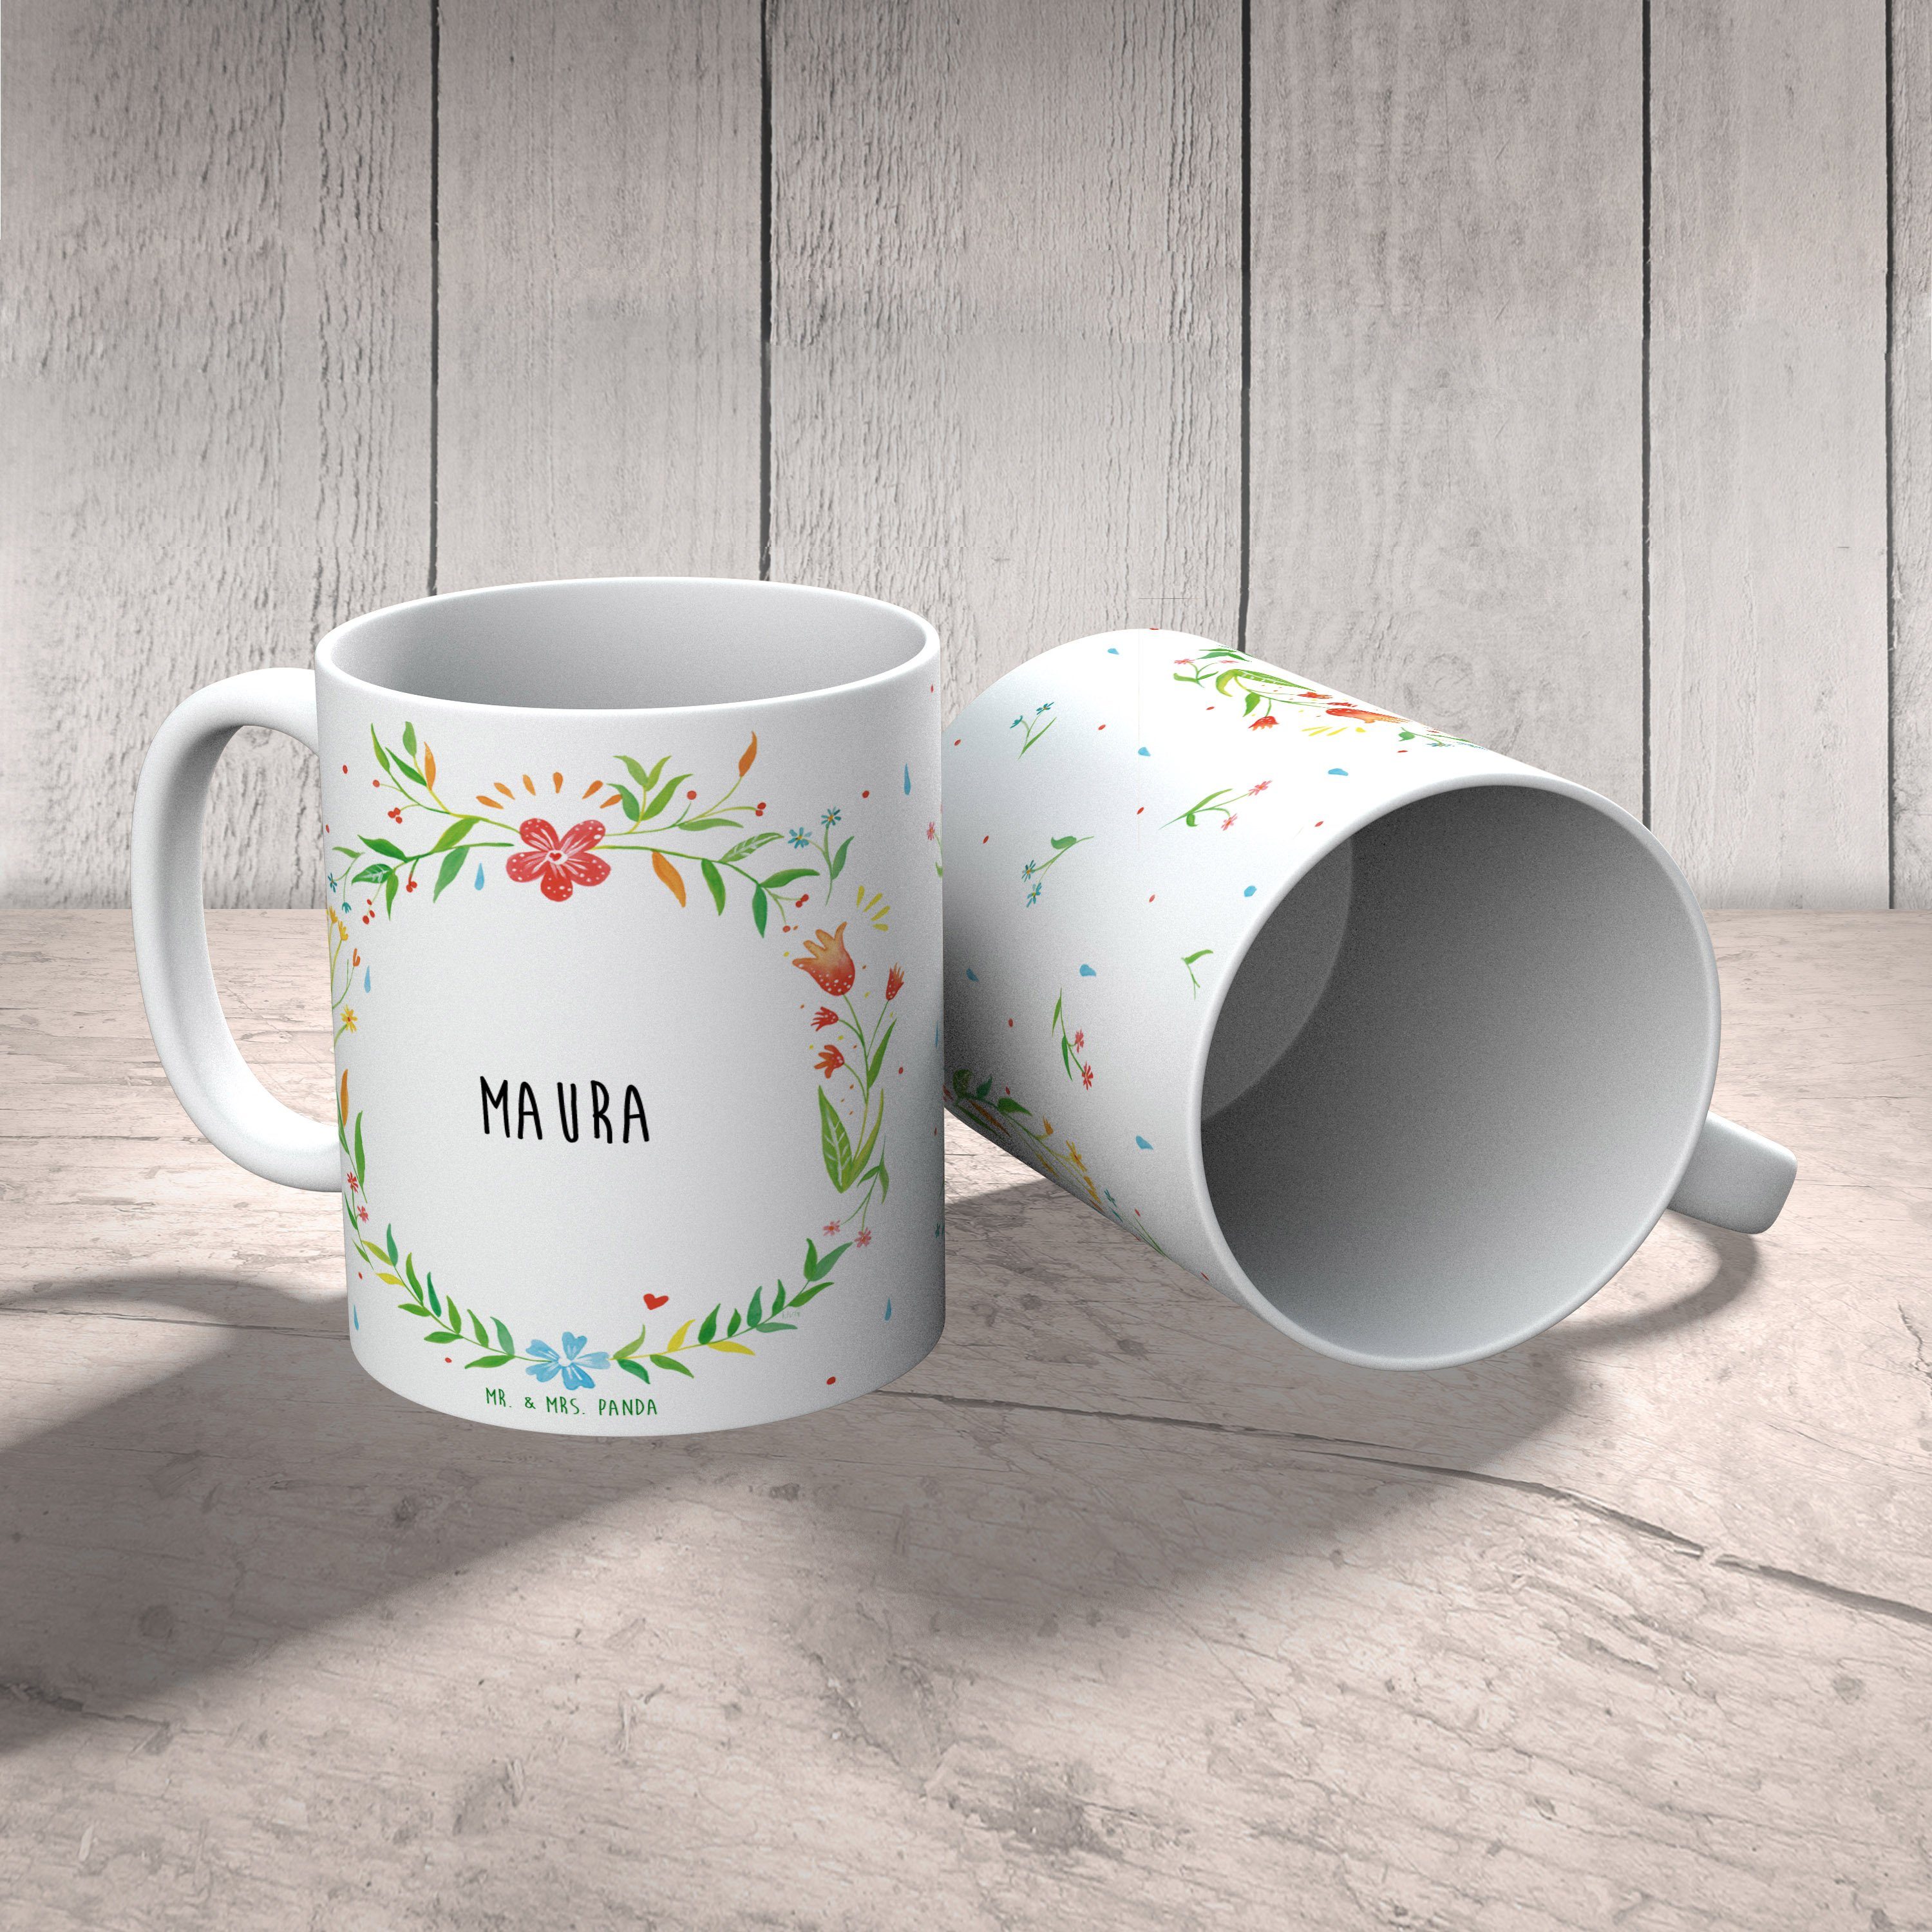 Maura Mrs. Mr. - Panda Tasse Keramik Motive, & Sprüche, Tasse Geschenk, Kaffeetasse, Tasse Kaffeebec,